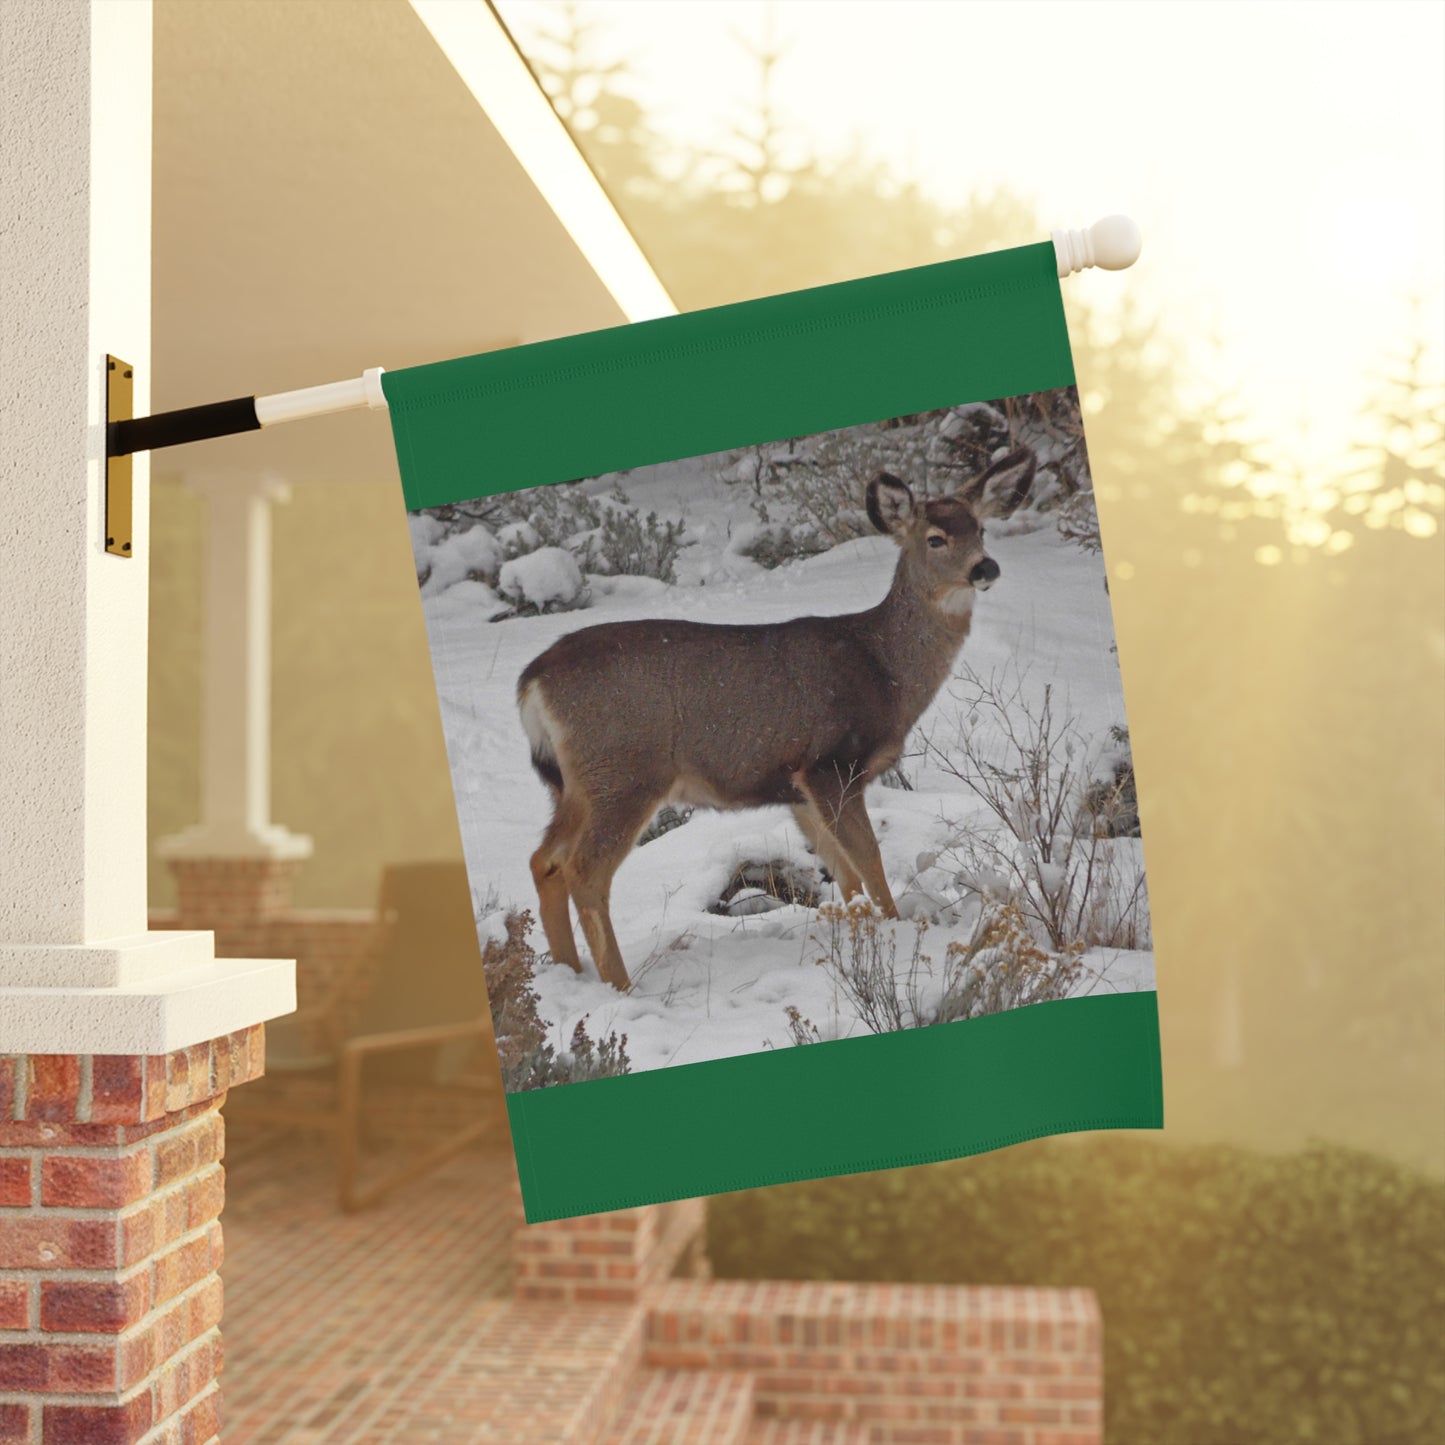 Snowy Deer Garden & House Banner